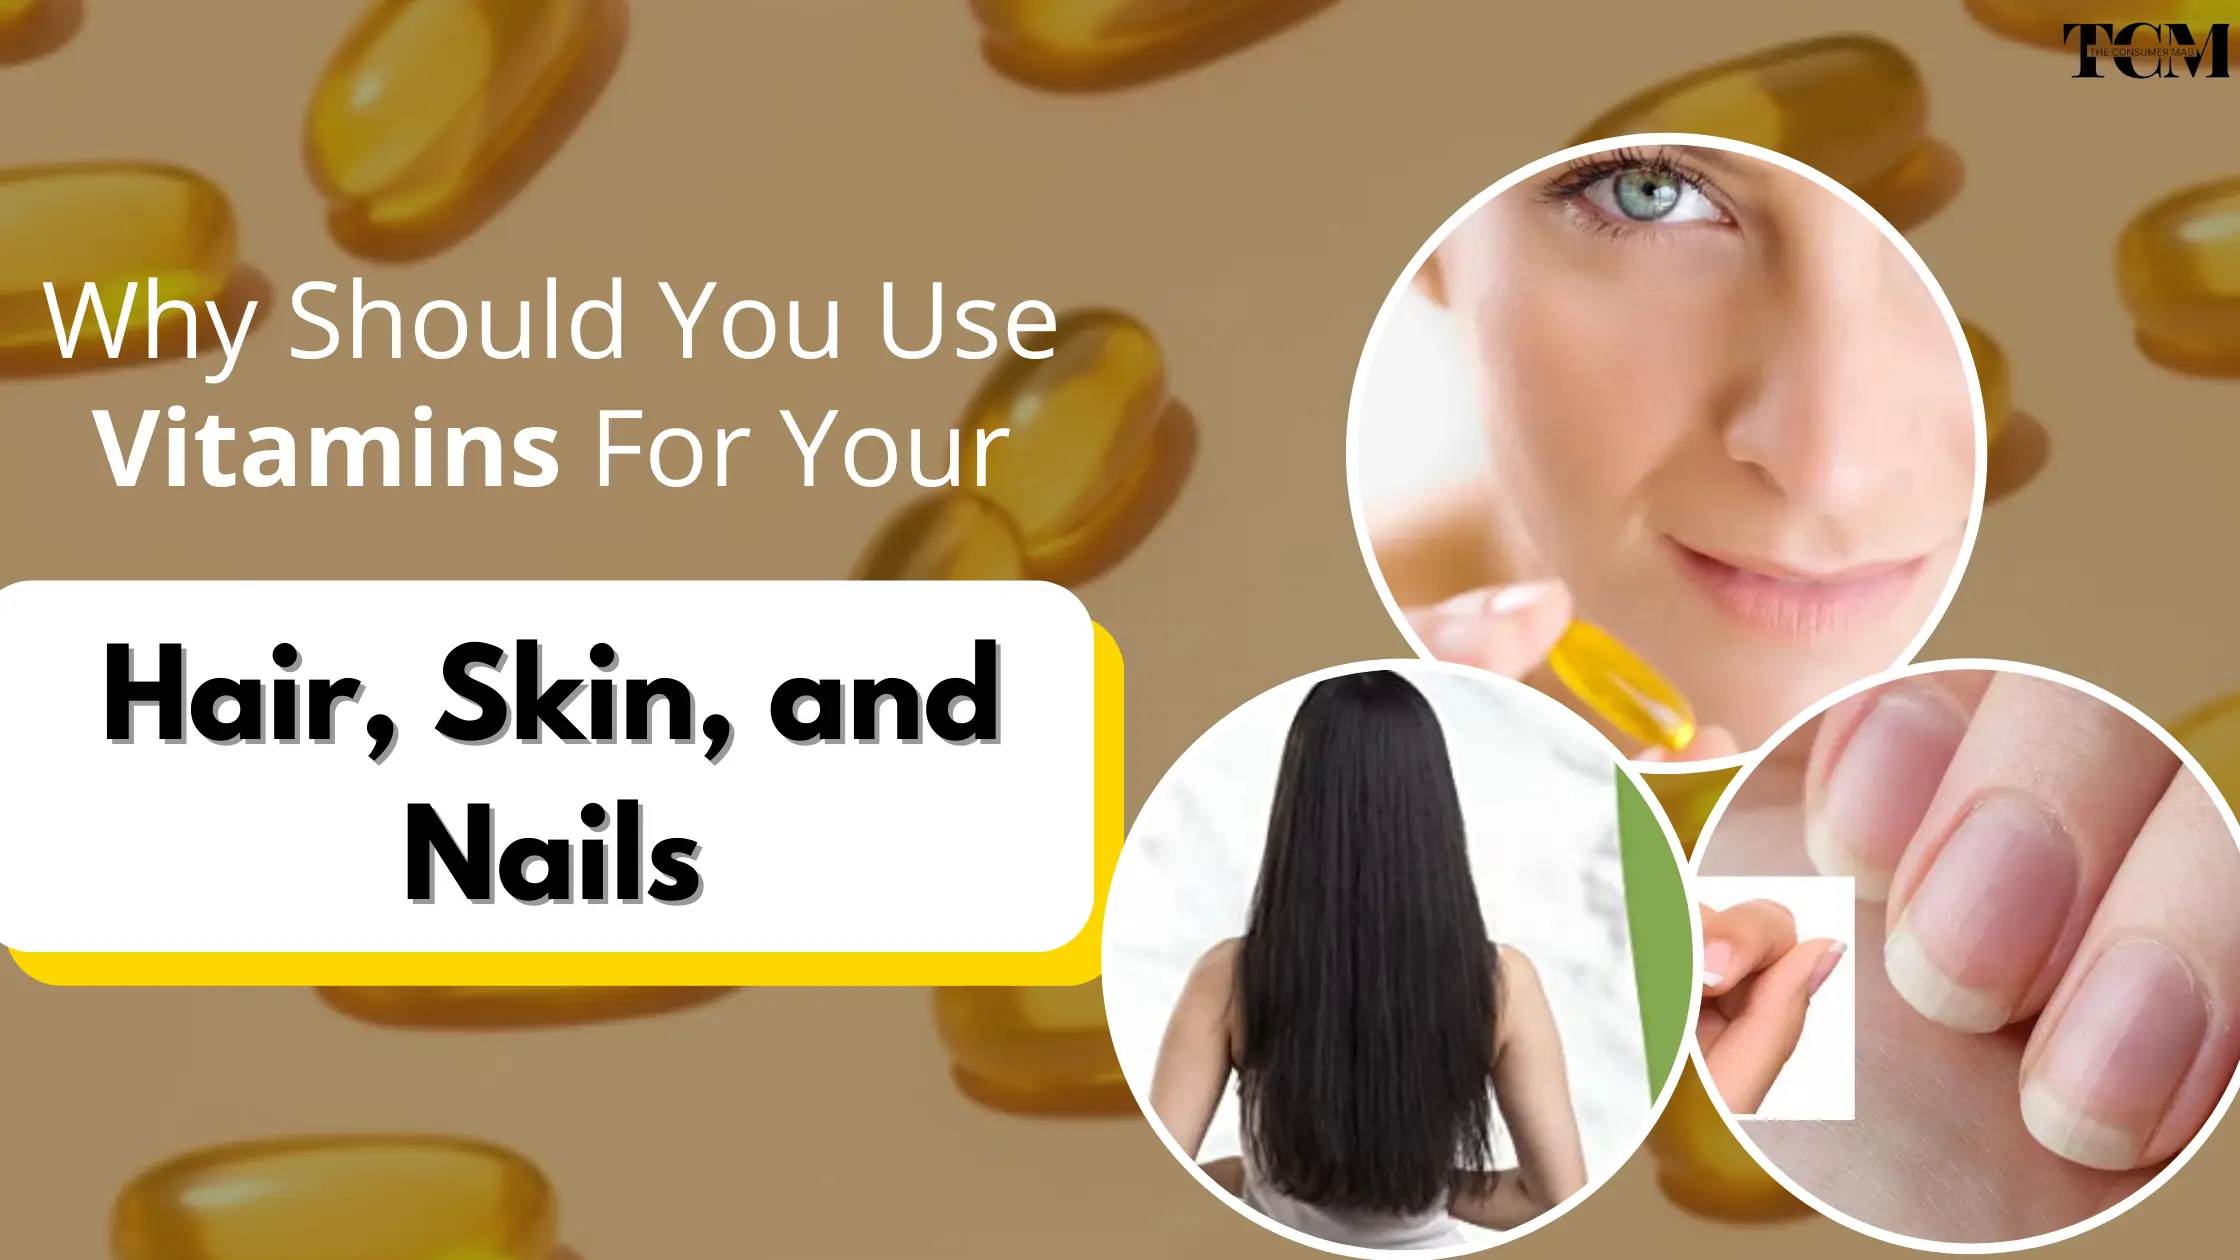 Vitamins for hair, skin, and nails